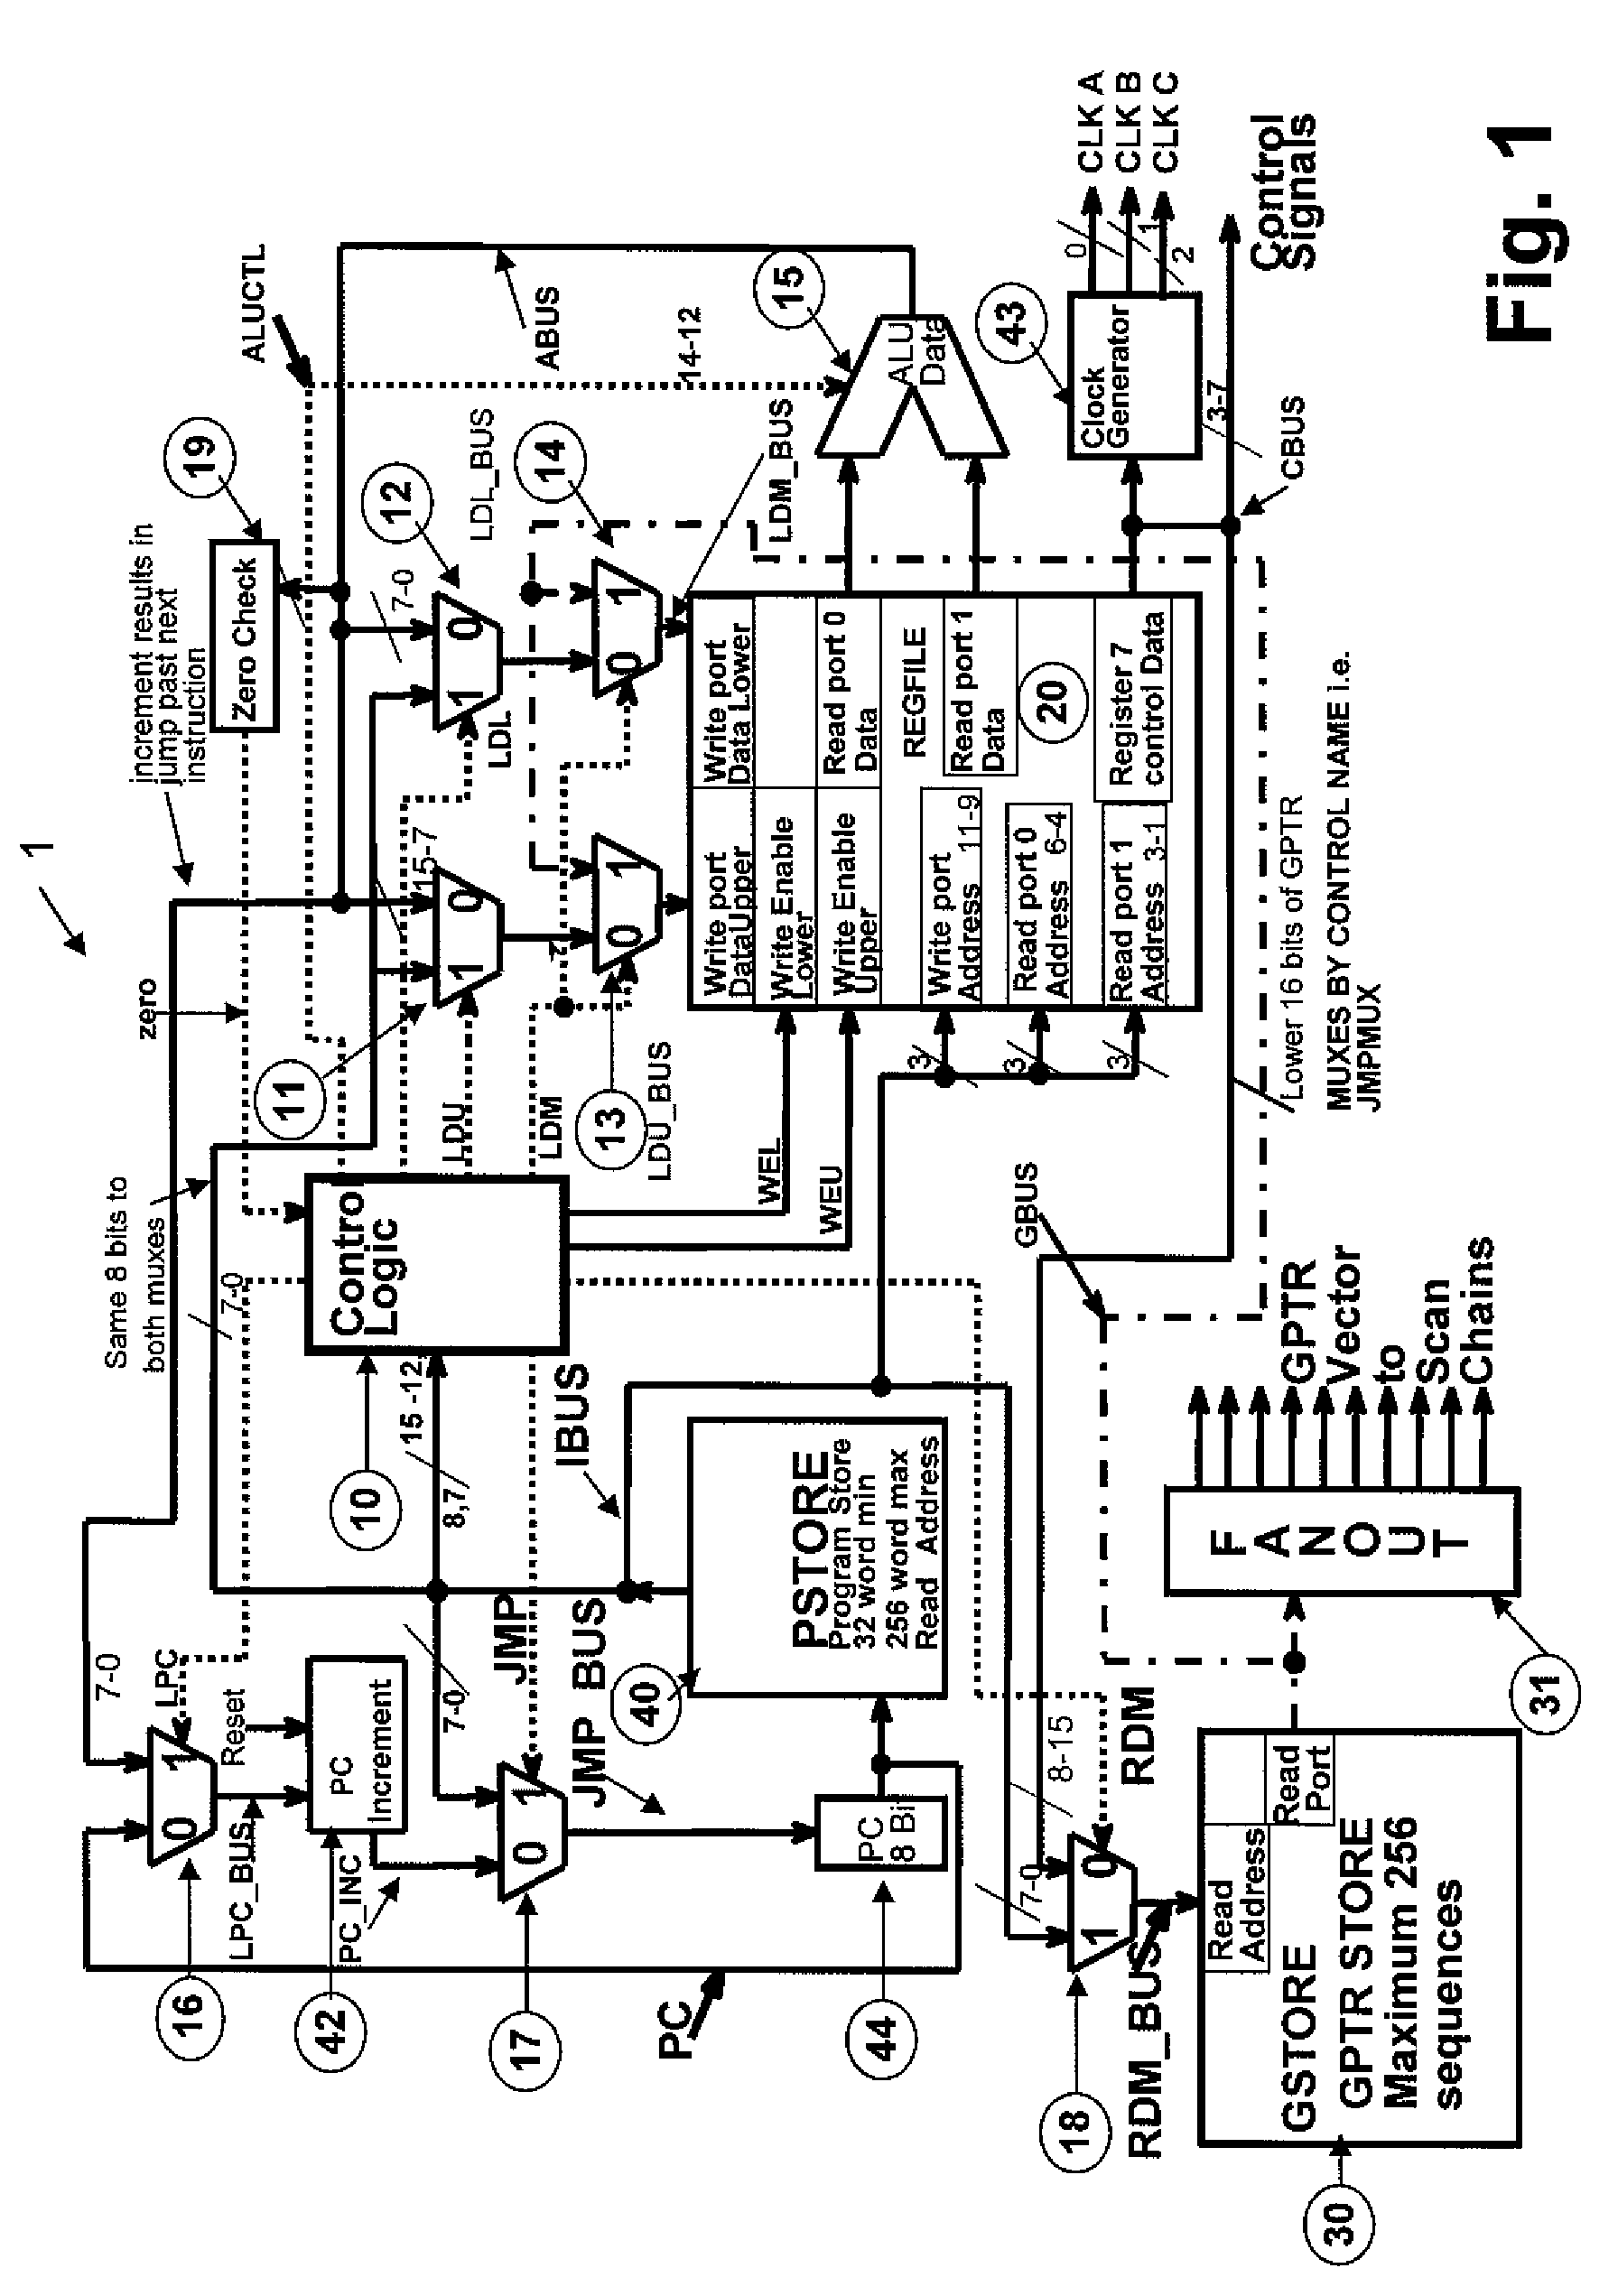 Microcontroller for logic built-in self test (LBIST)